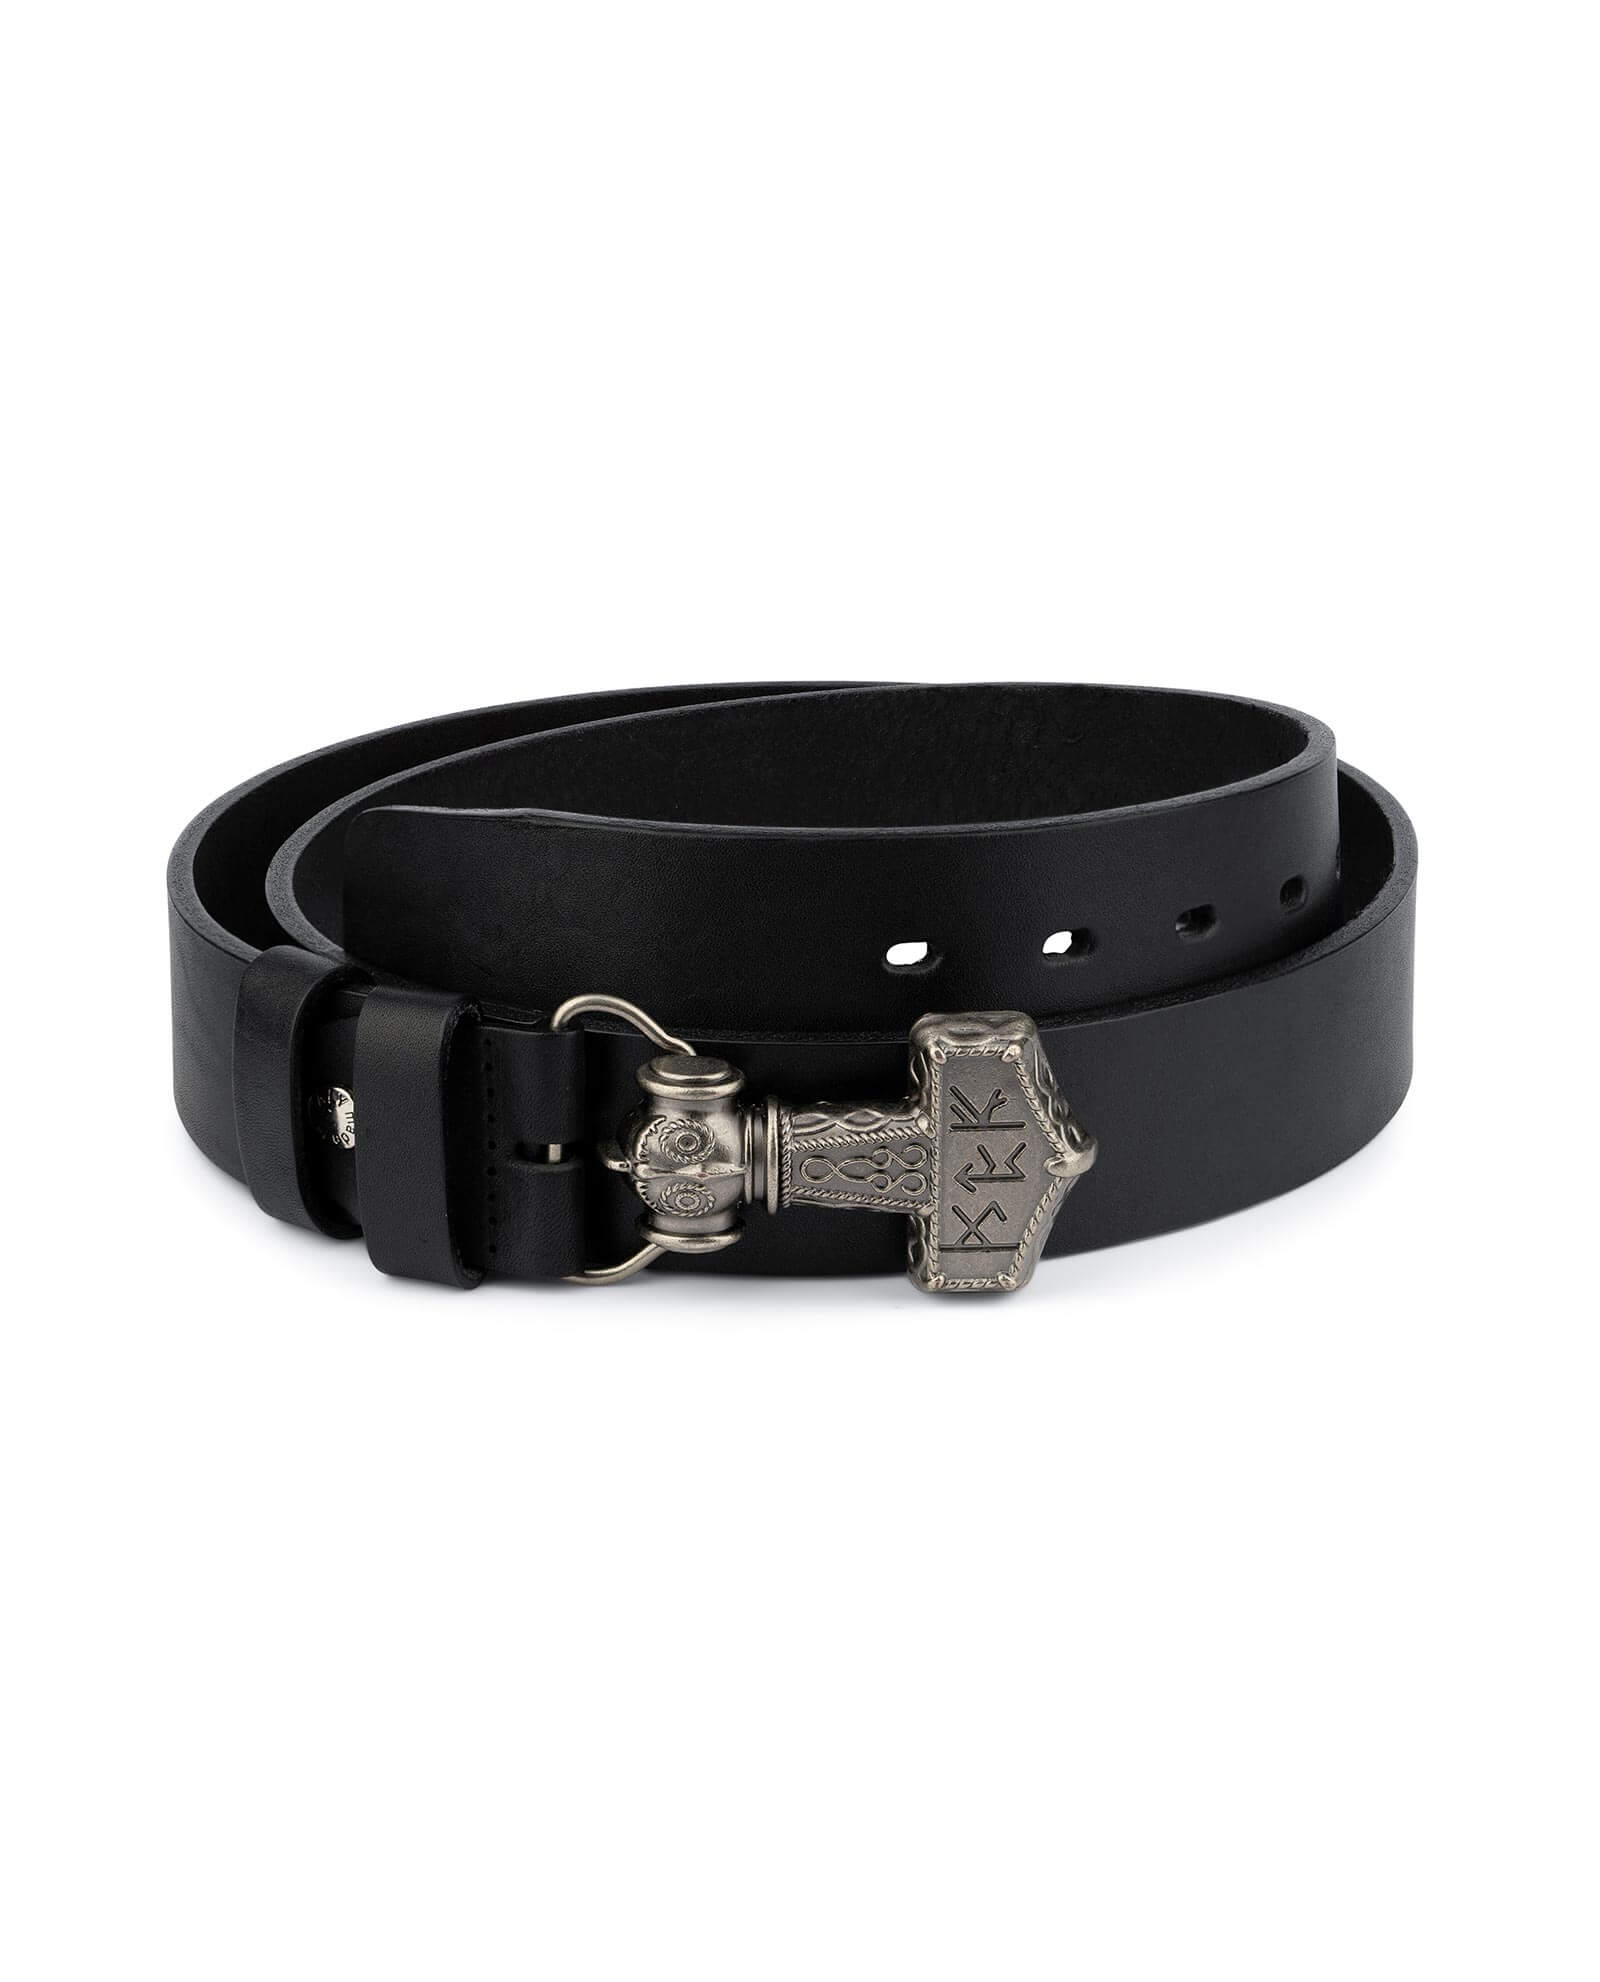 Buy Viking Leather Belt | Mjolnir Sword Buckle | LeatherBeltsOnline.com